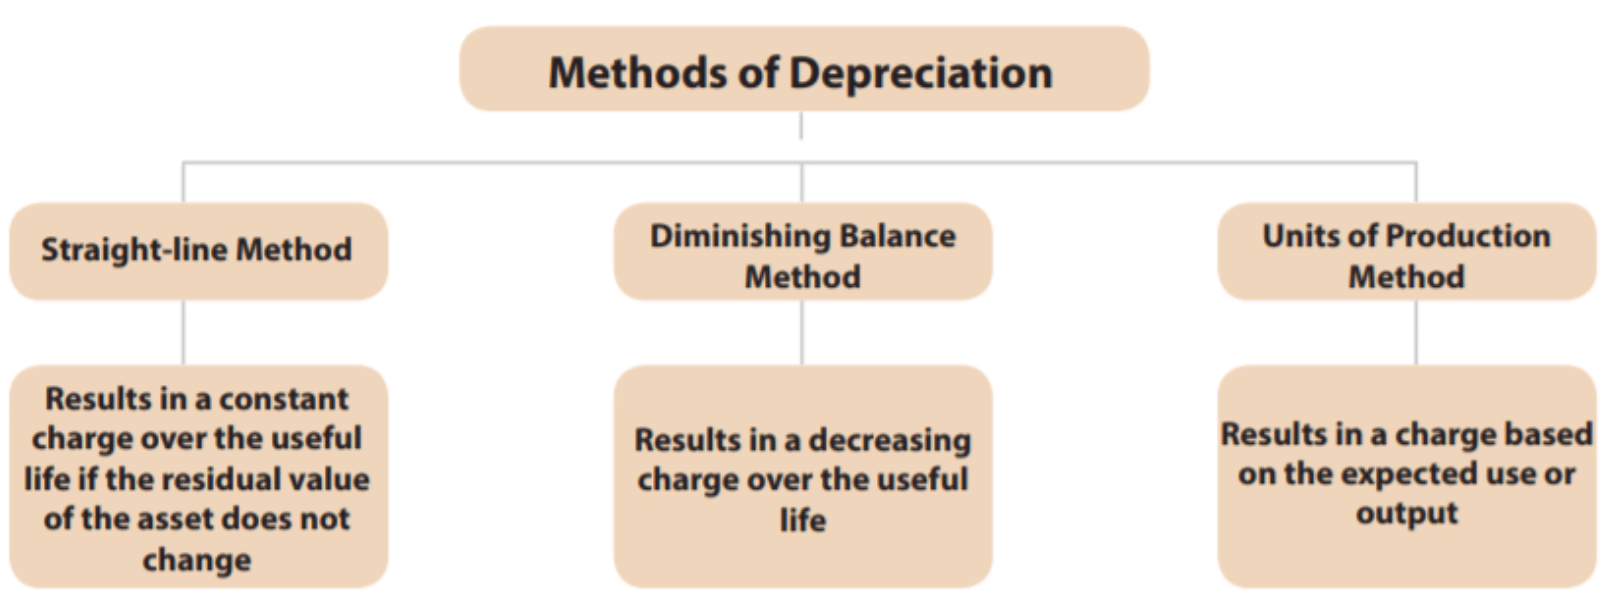 Methods of Depreciation